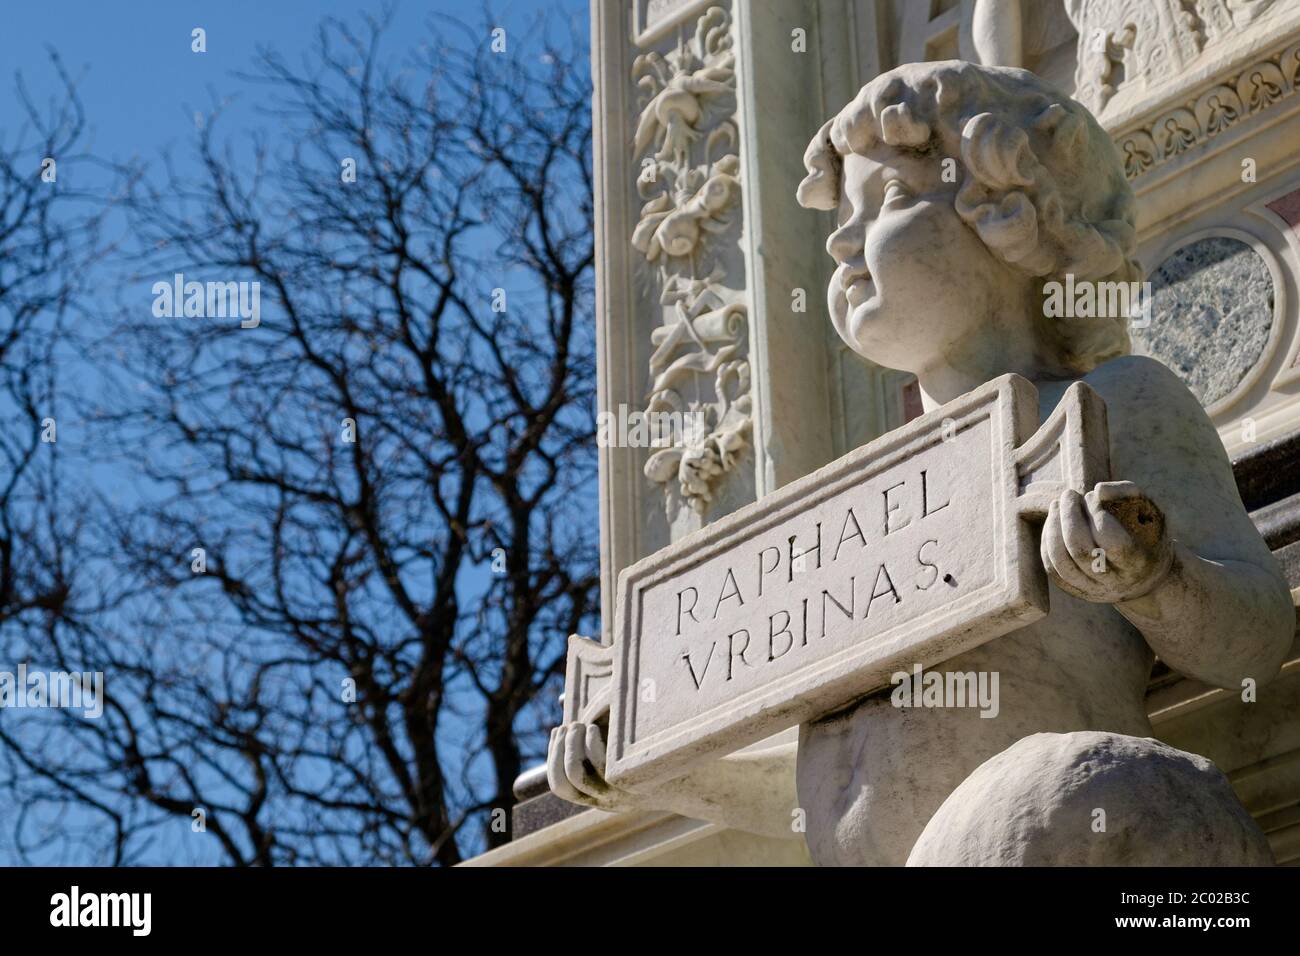 Raffaello Sanzio (Raphael) monument in Urbino (Italy) his birthplace - Detail Stock Photo